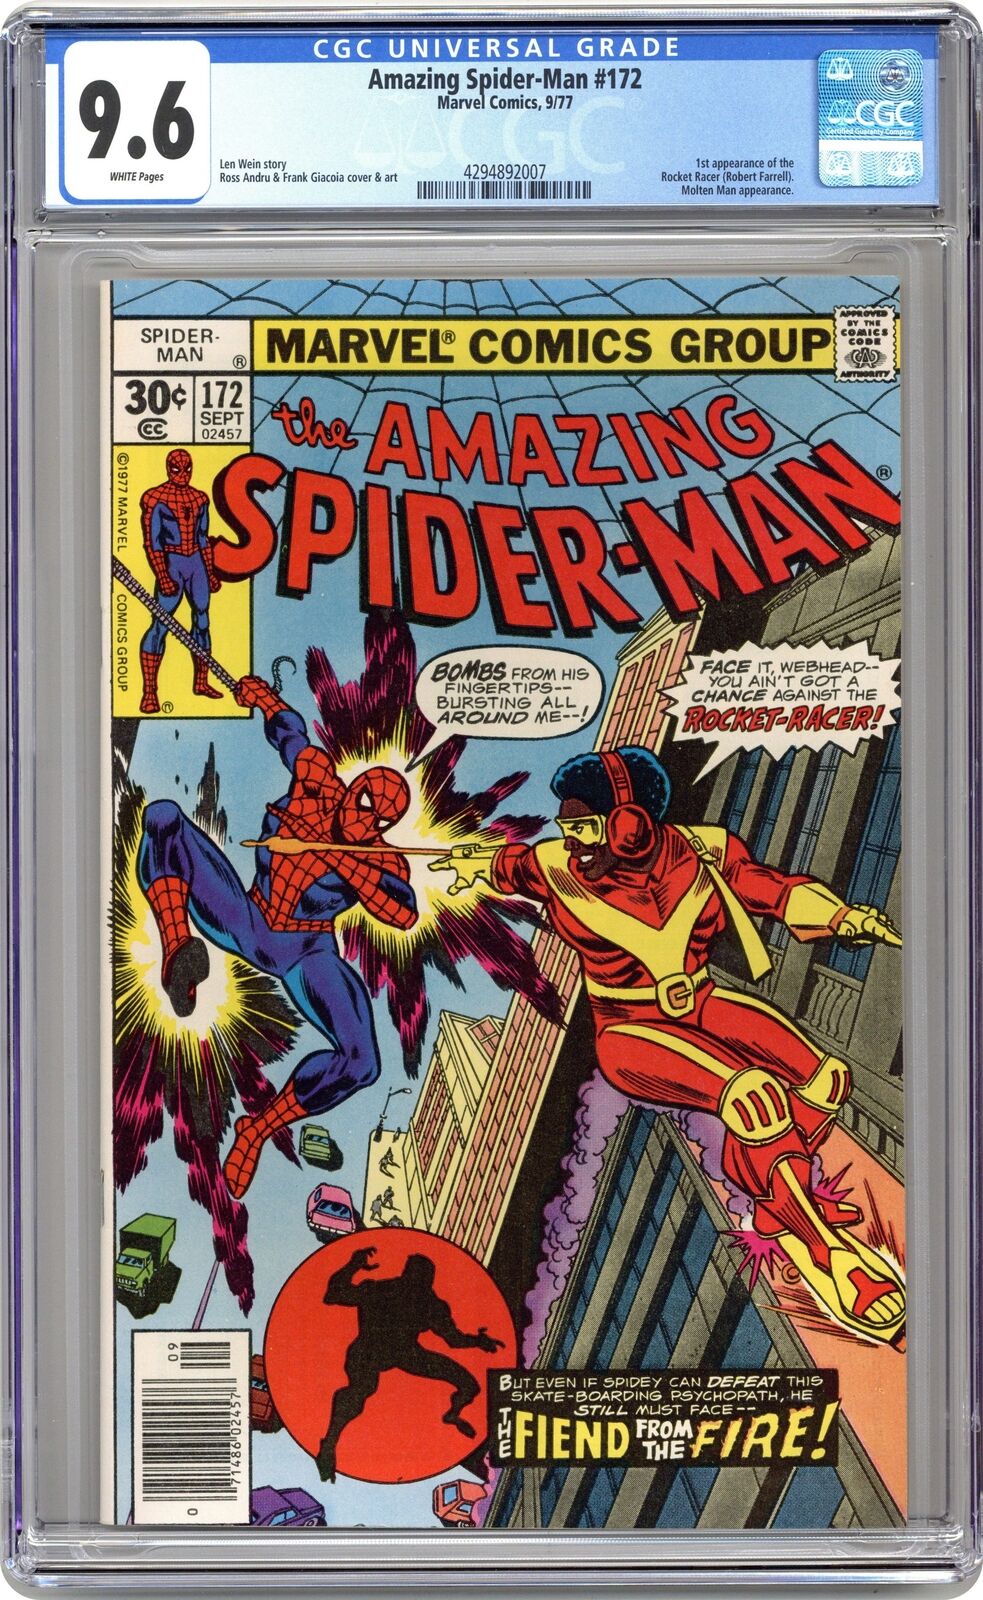 Amazing Spider-Man #172 CGC 9.6 1977 4294892007